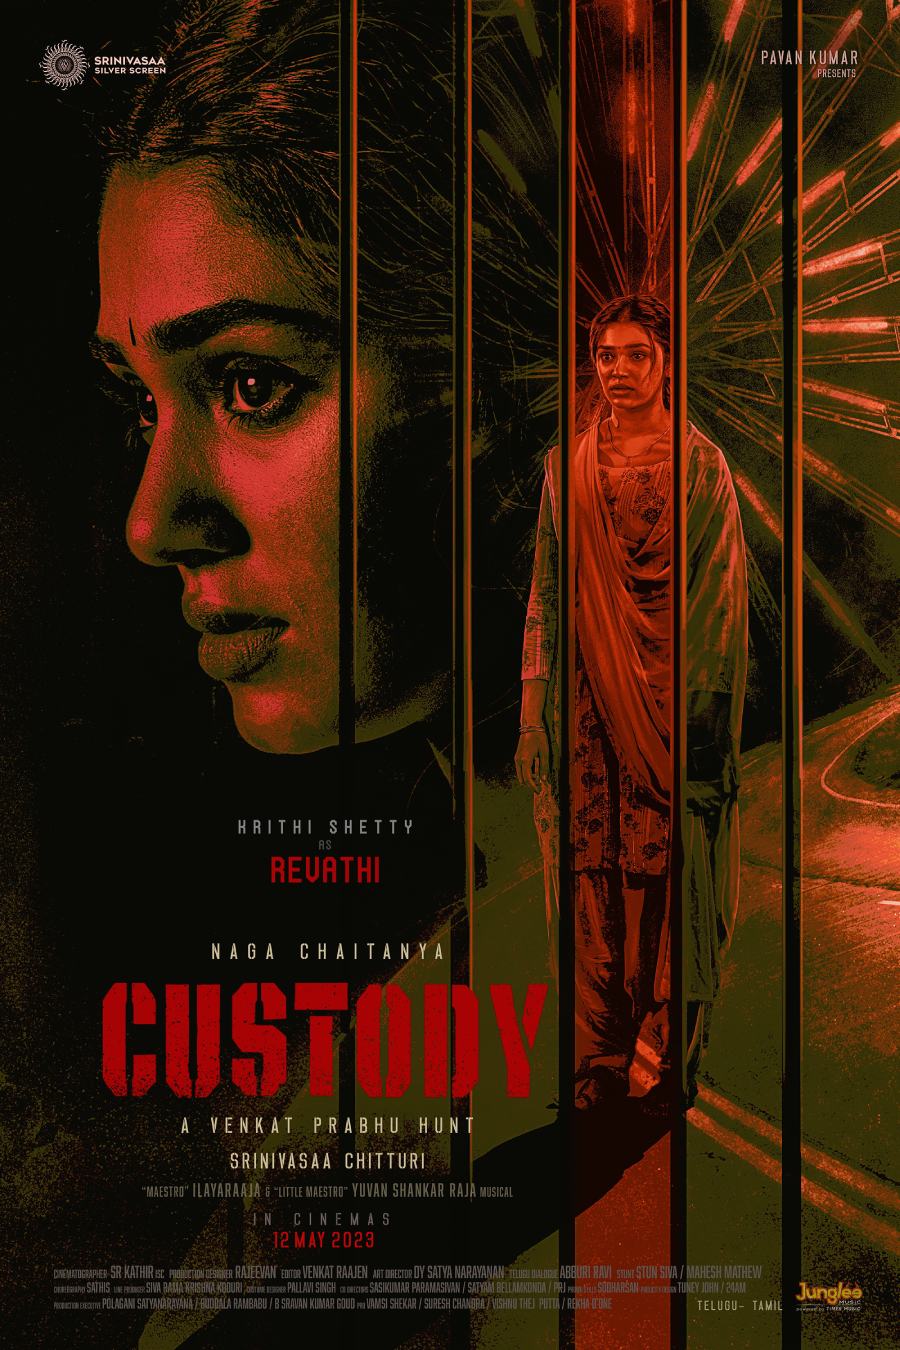 Krithi Shetty's look from Custody